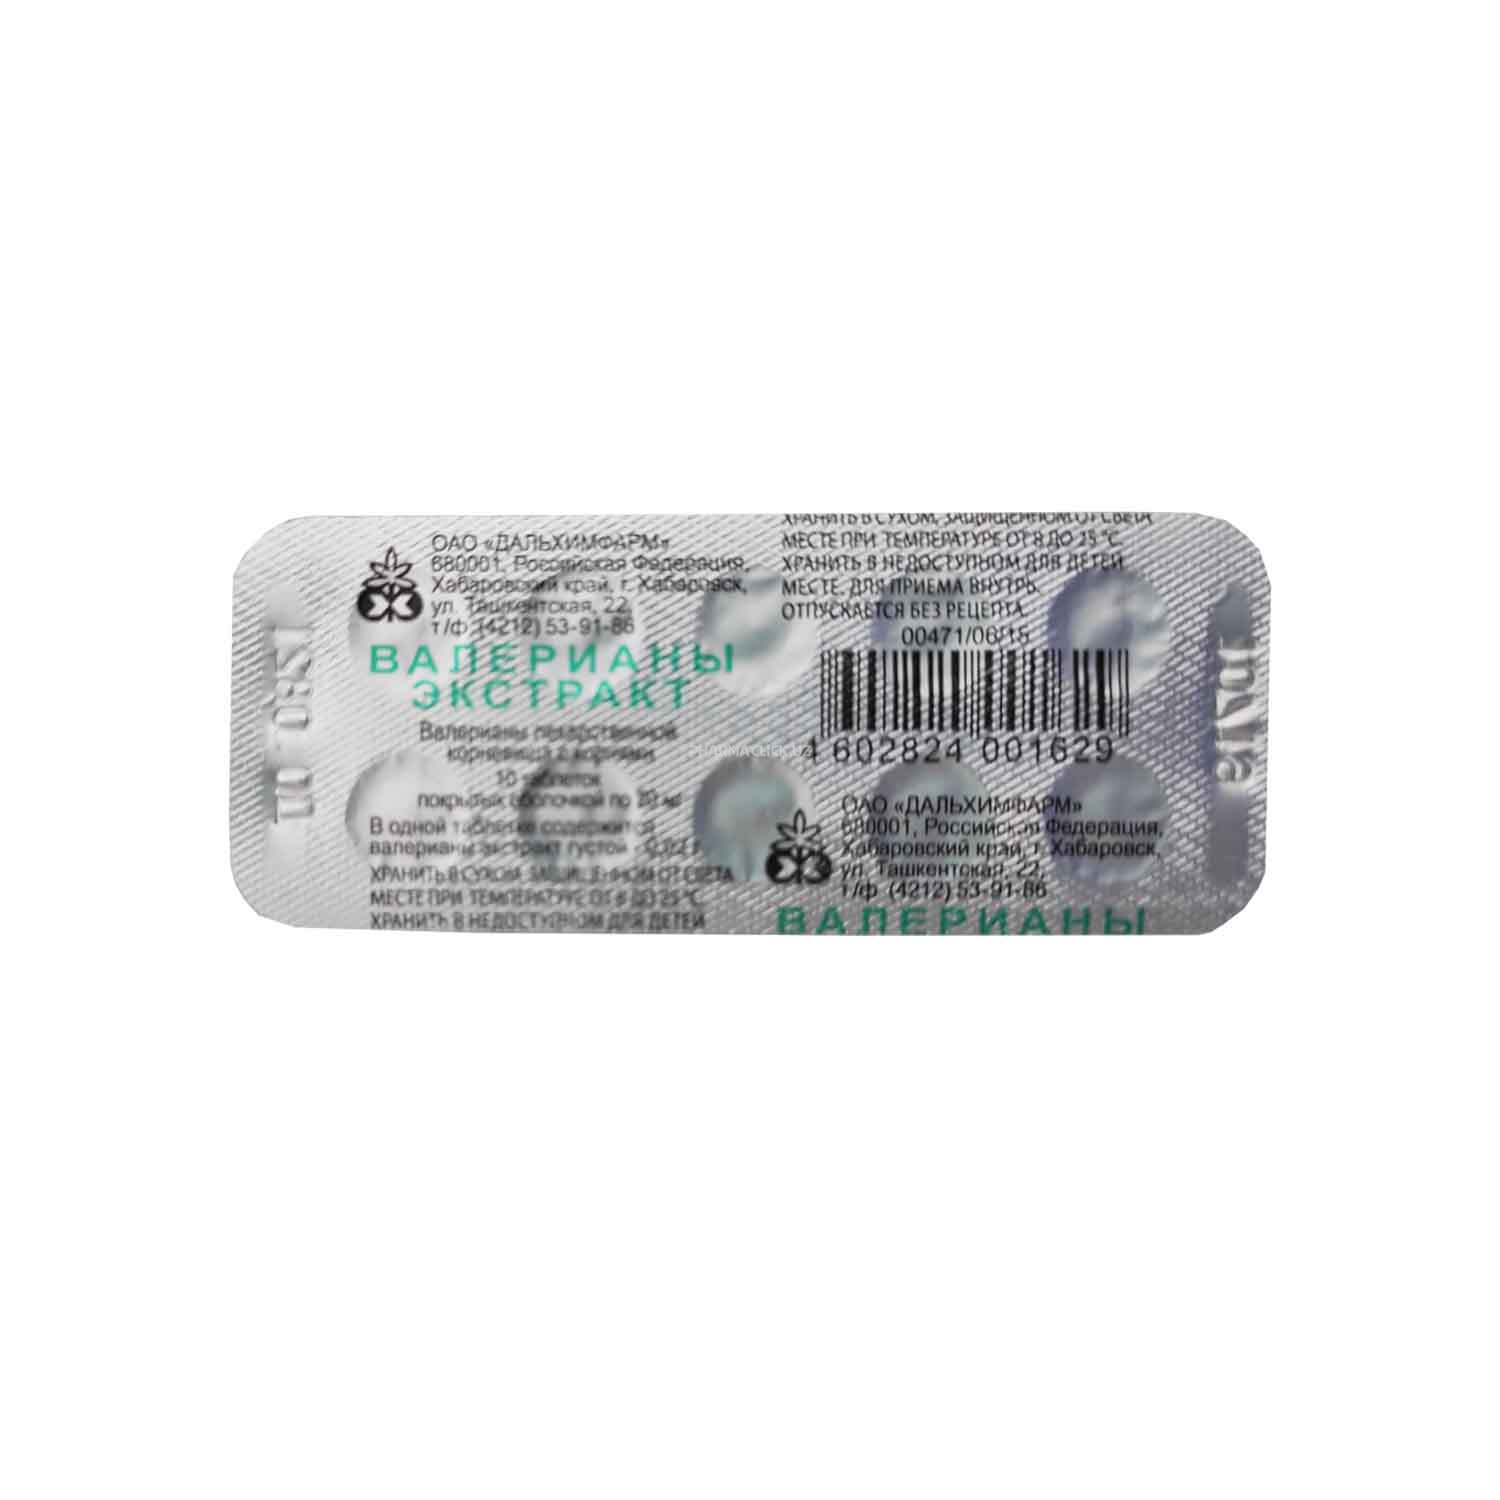 Valeriani ekstrakt tab. 20 mg №10  Dalximfarm OAO